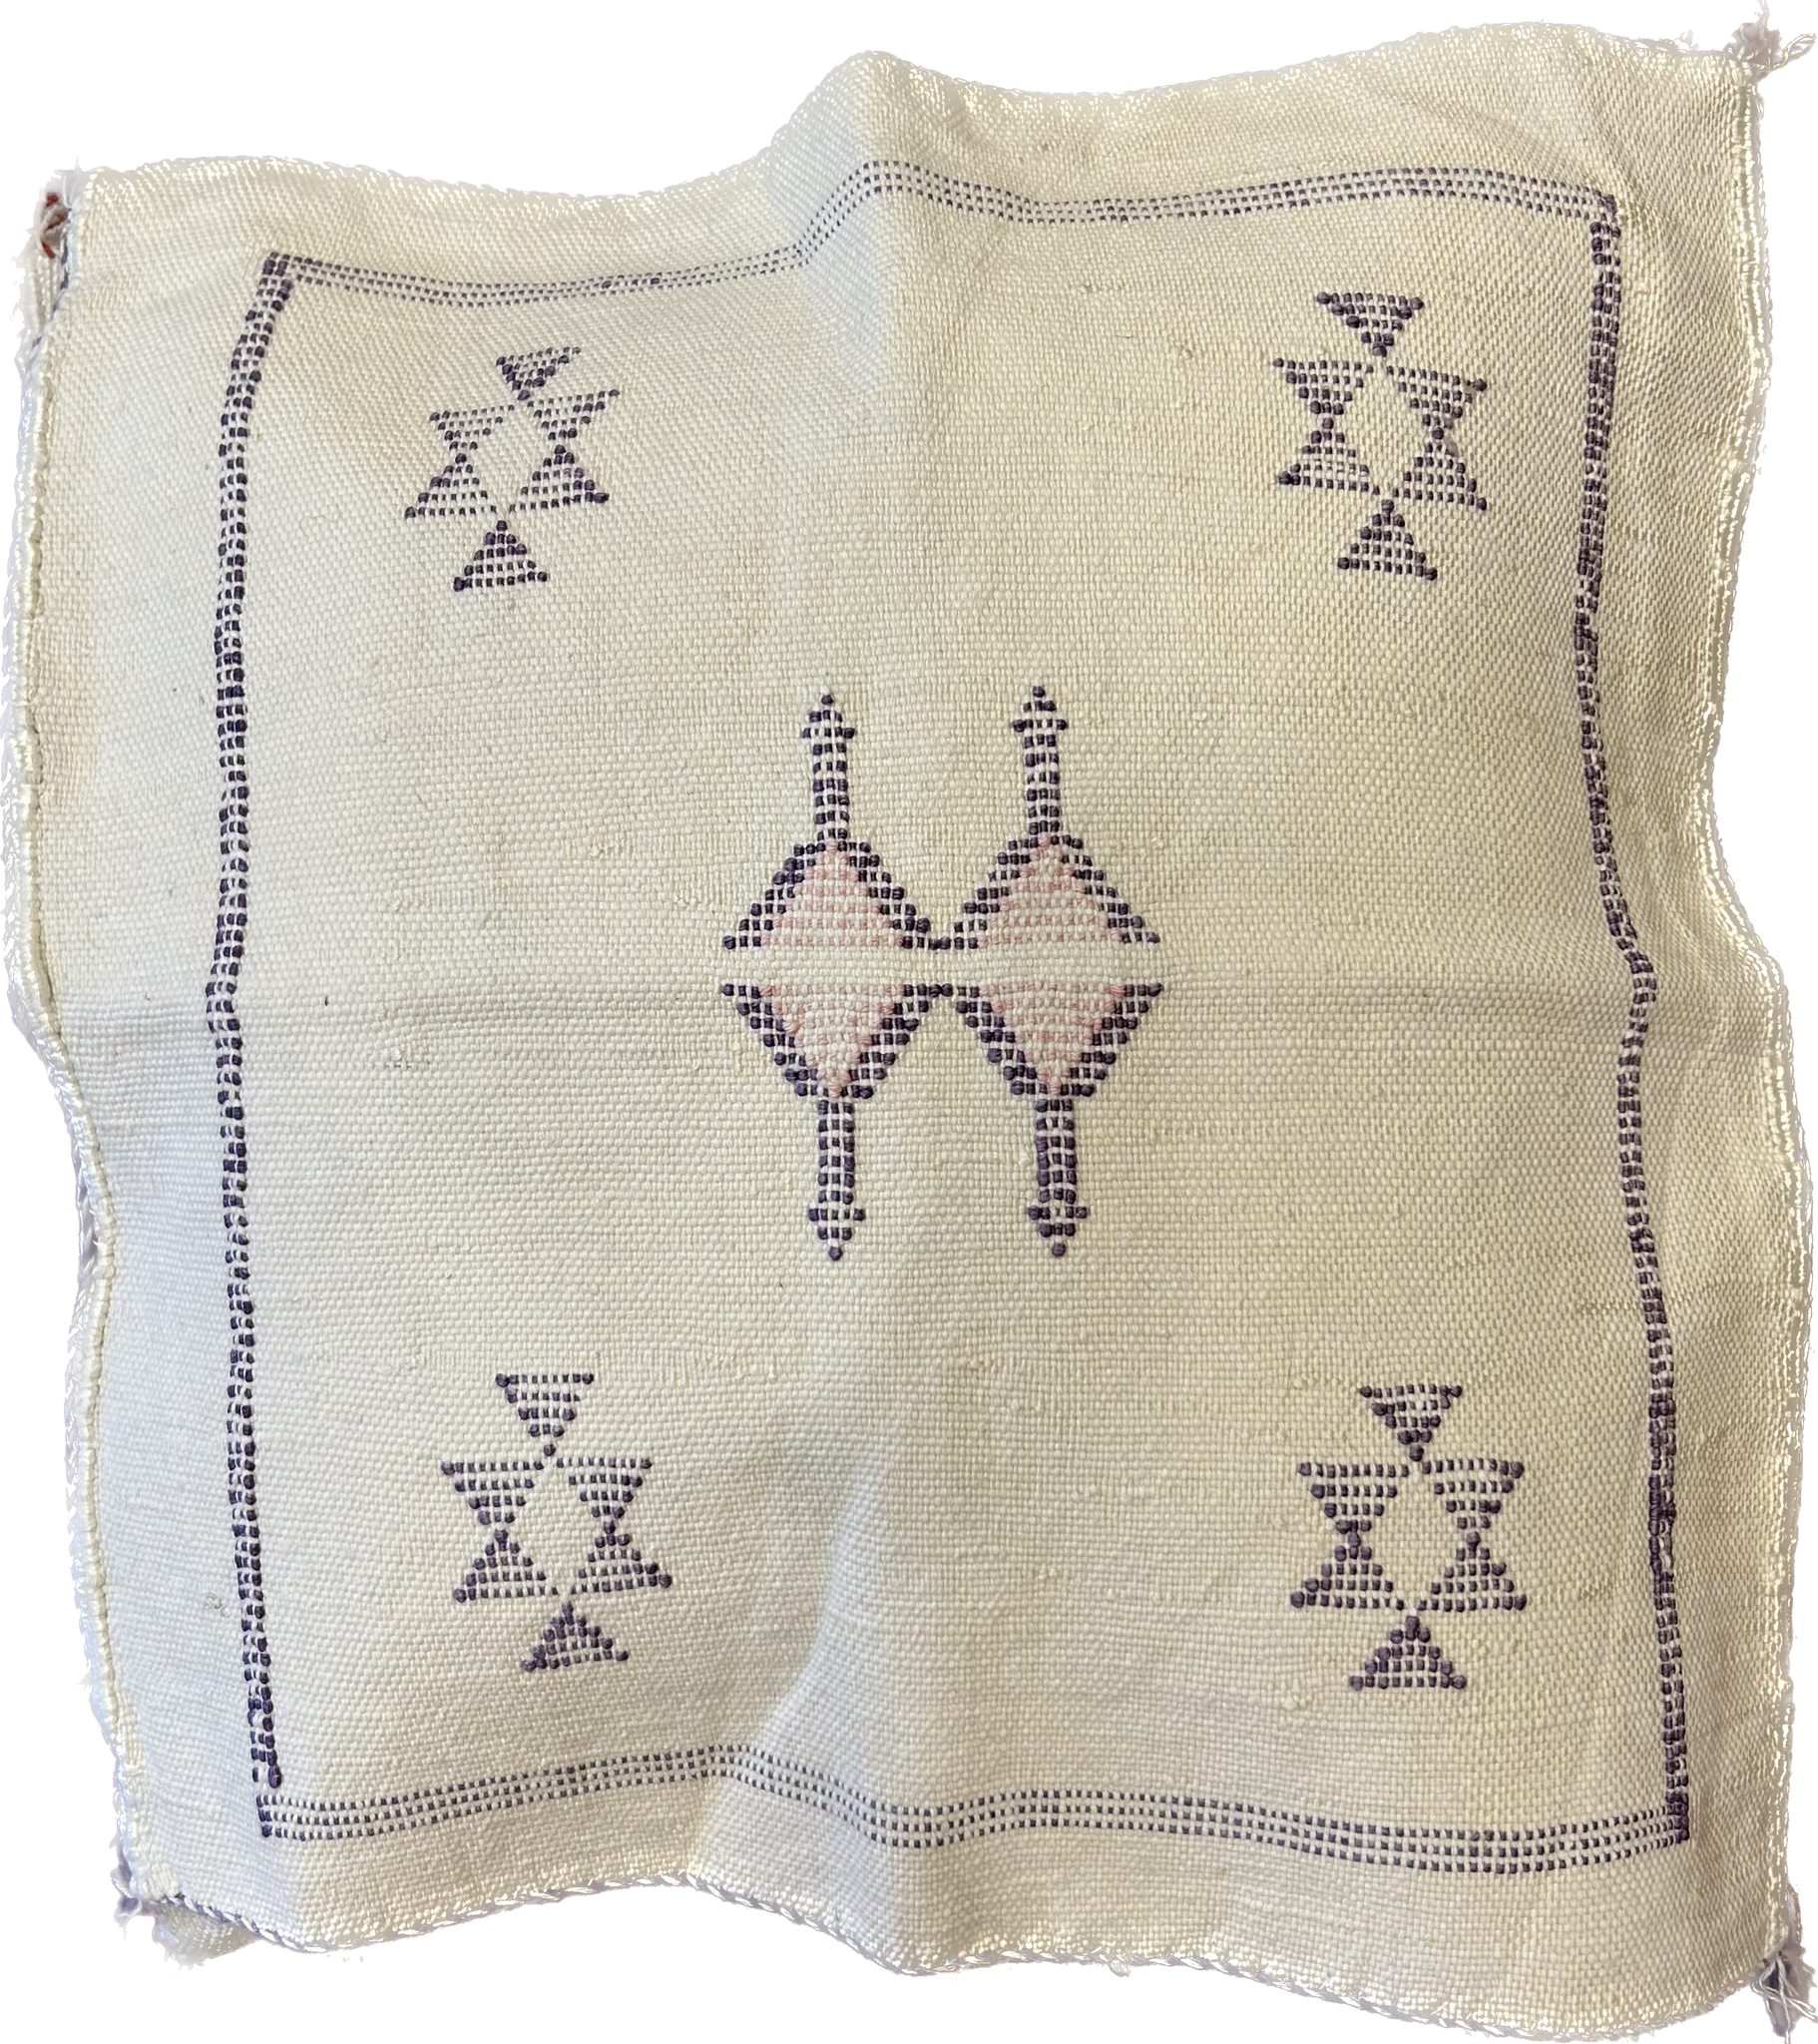 Moroccan Cactus Silk Cushion Covers